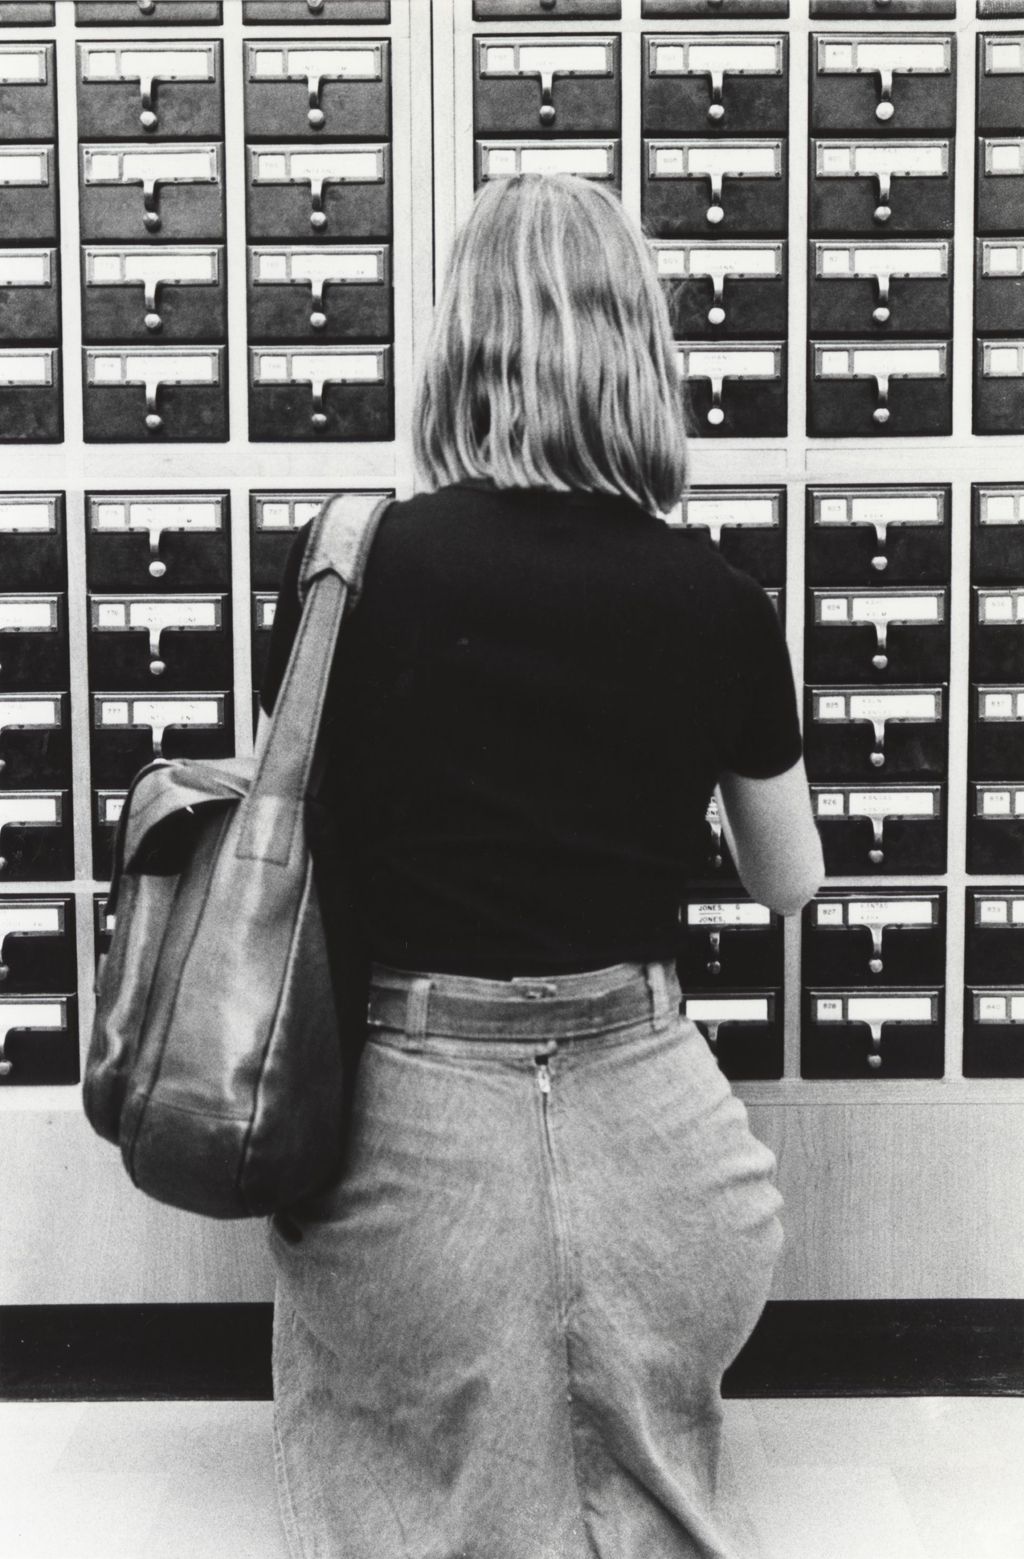 Student using a card catalog at the Richard J. Daley Library